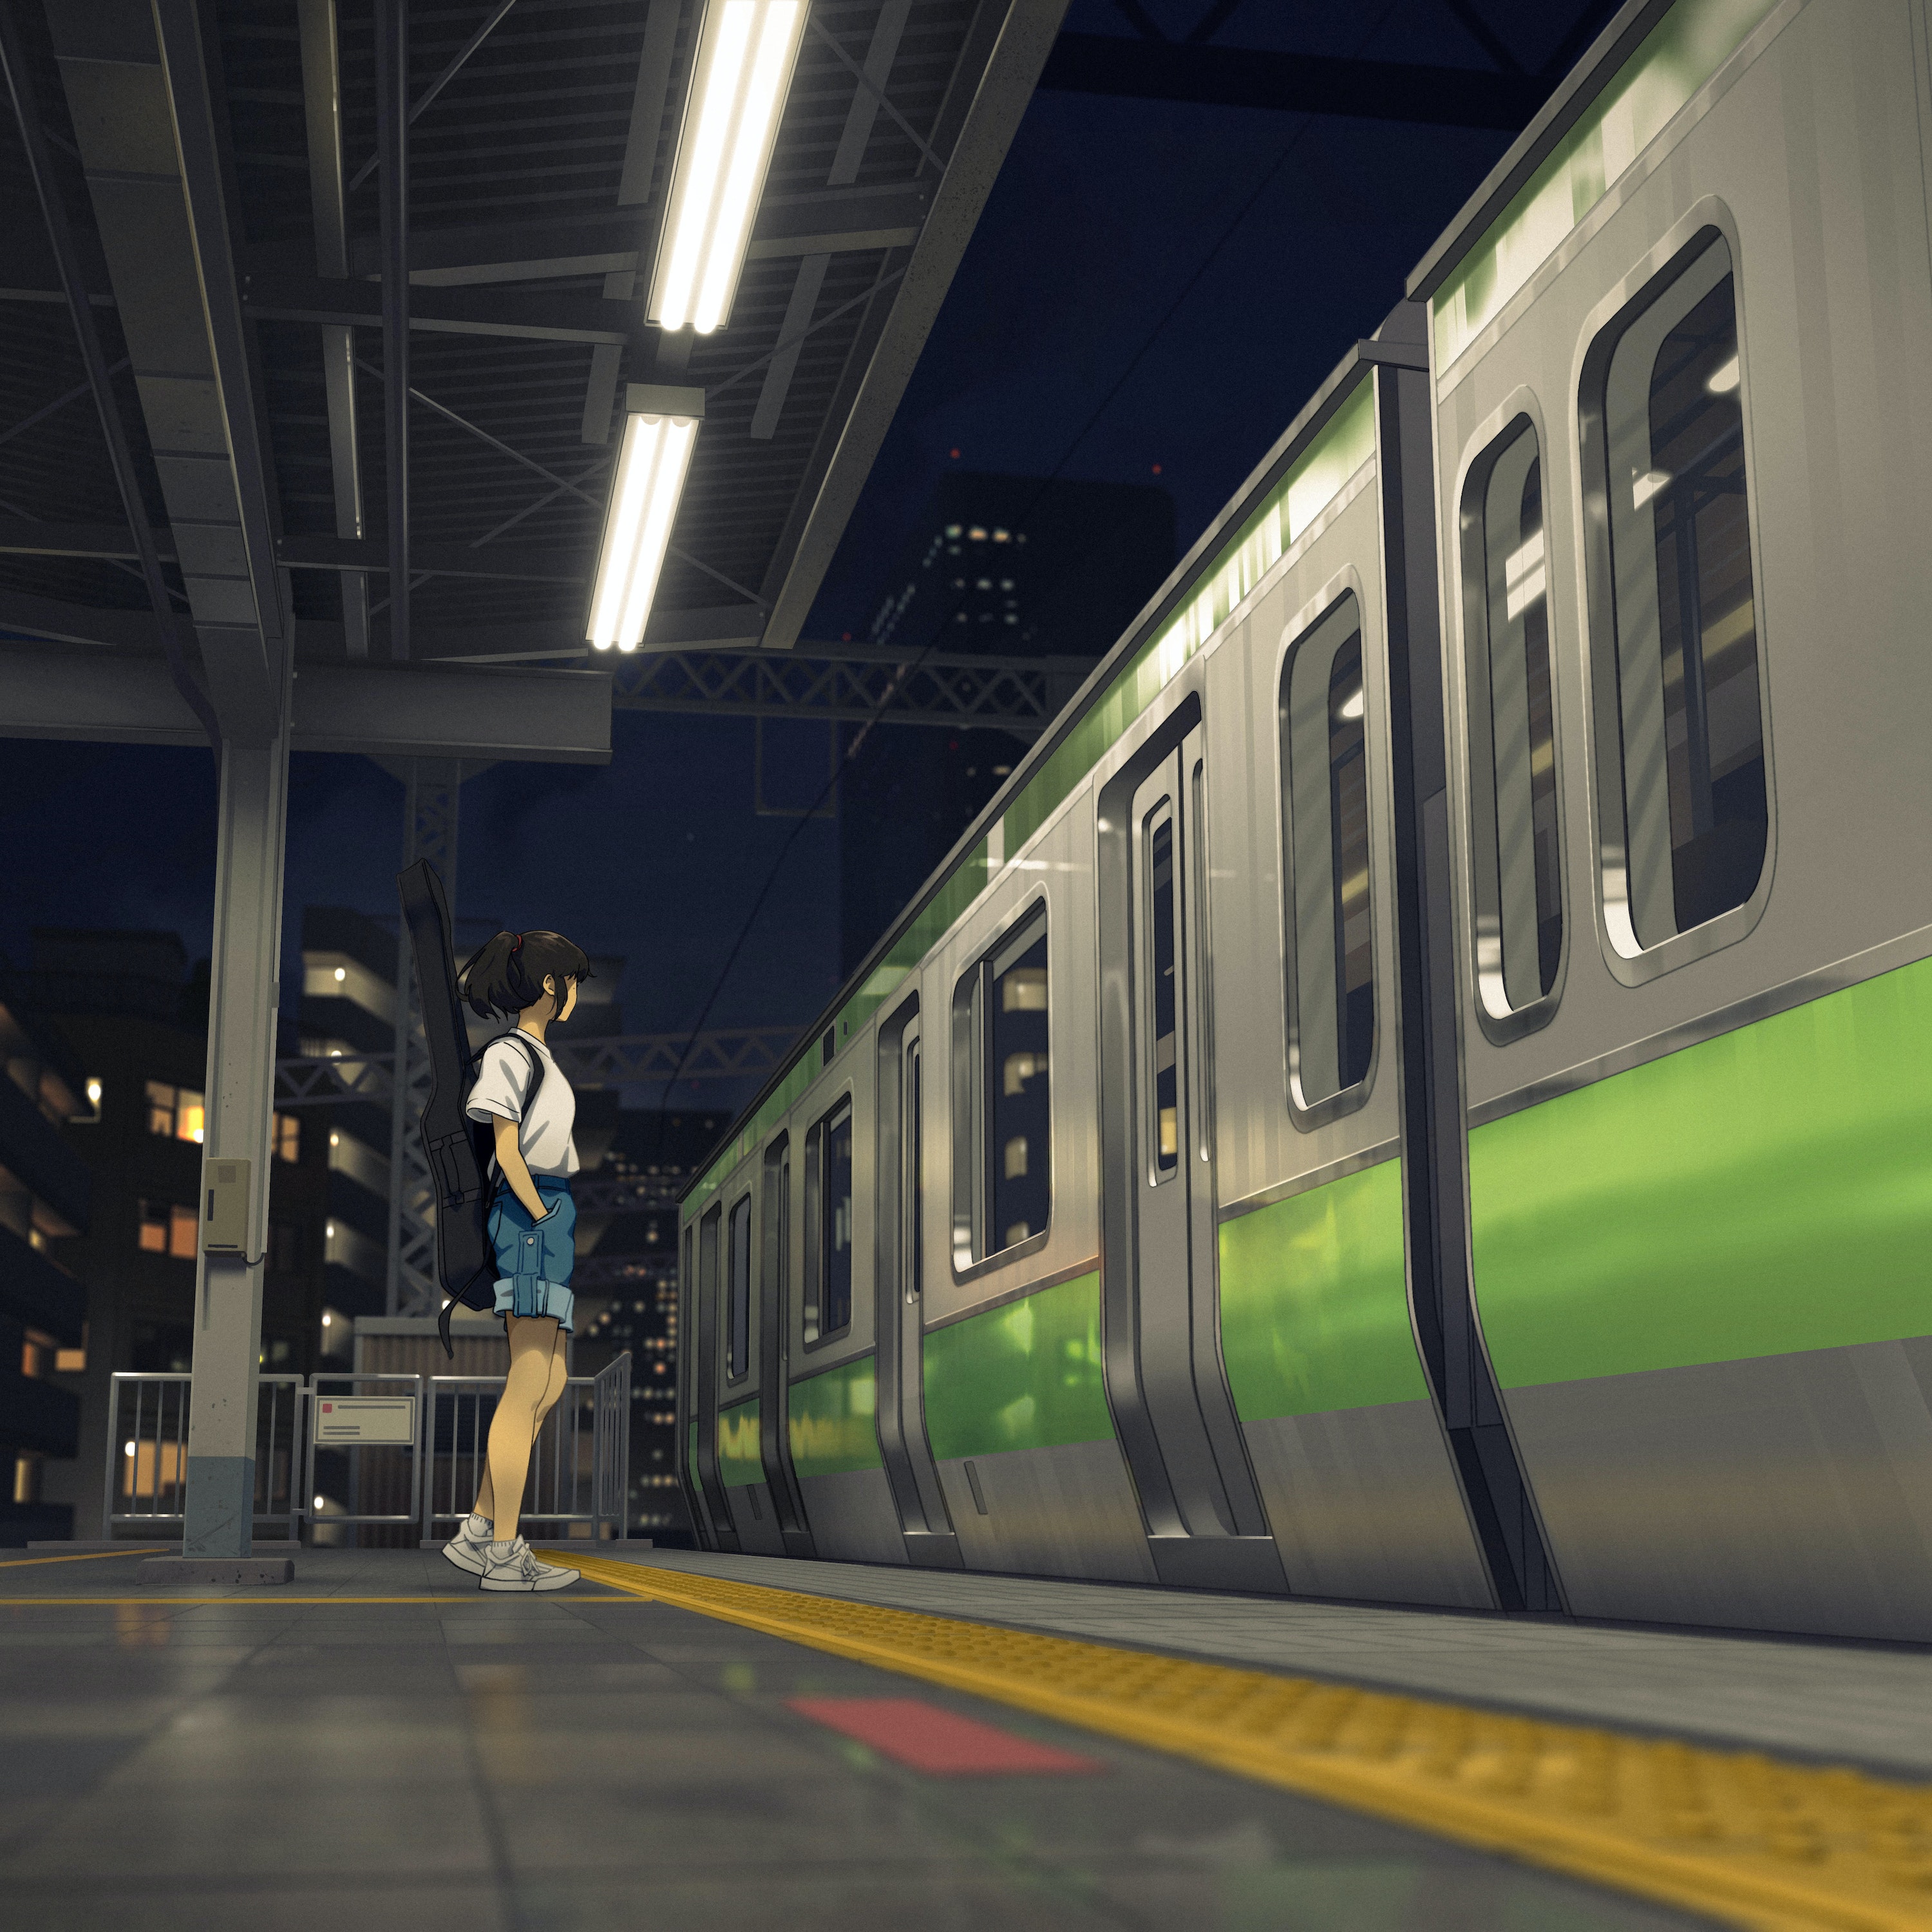 Bysau Digital Art Artwork Illustration Train Night Waiting Women Guitar Hands In Pockets Anime Girls 3000x3000